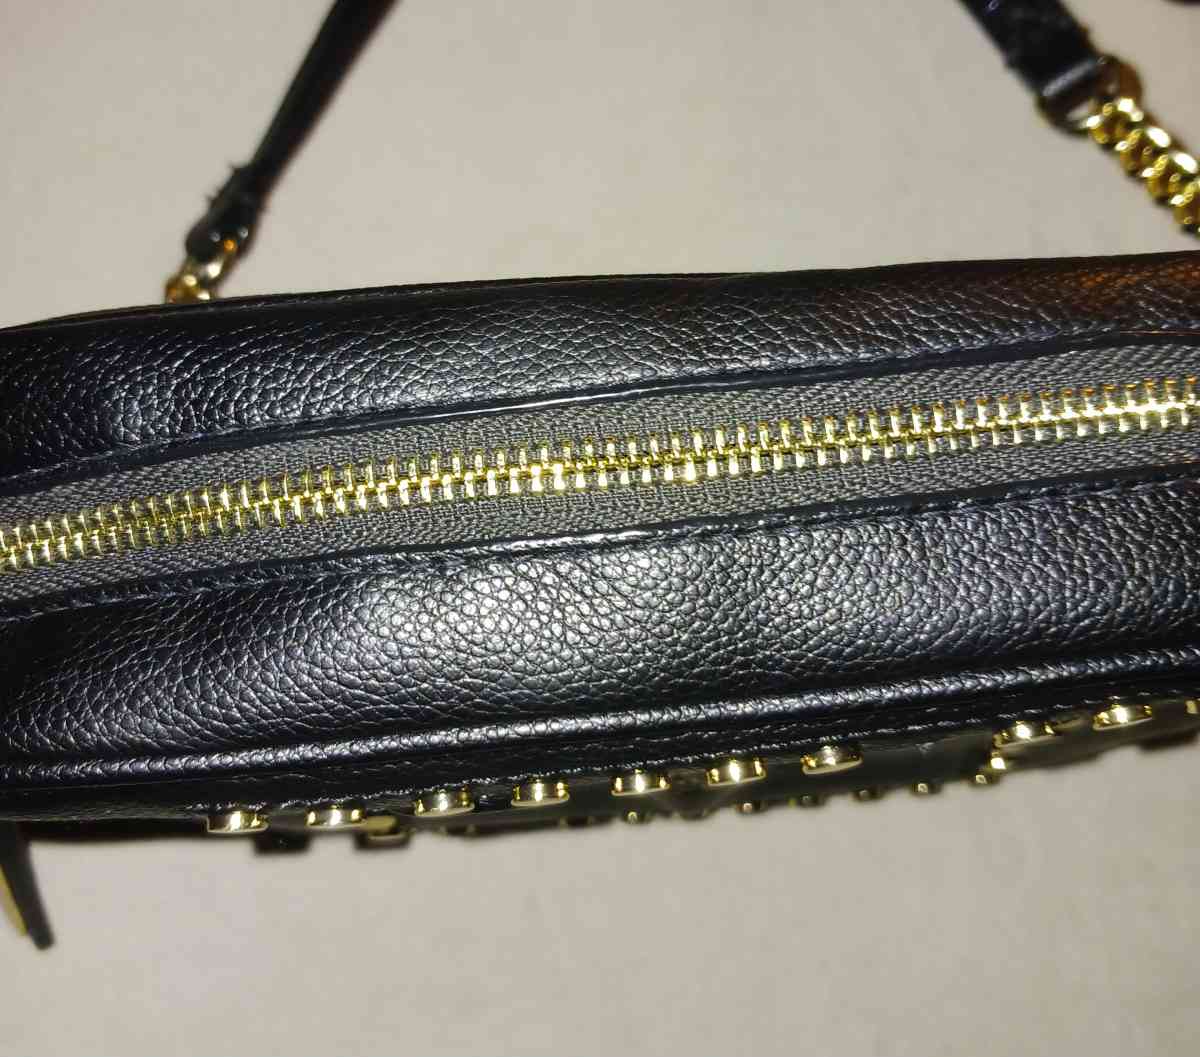 Victorias Secret Leather Crossbody Bag